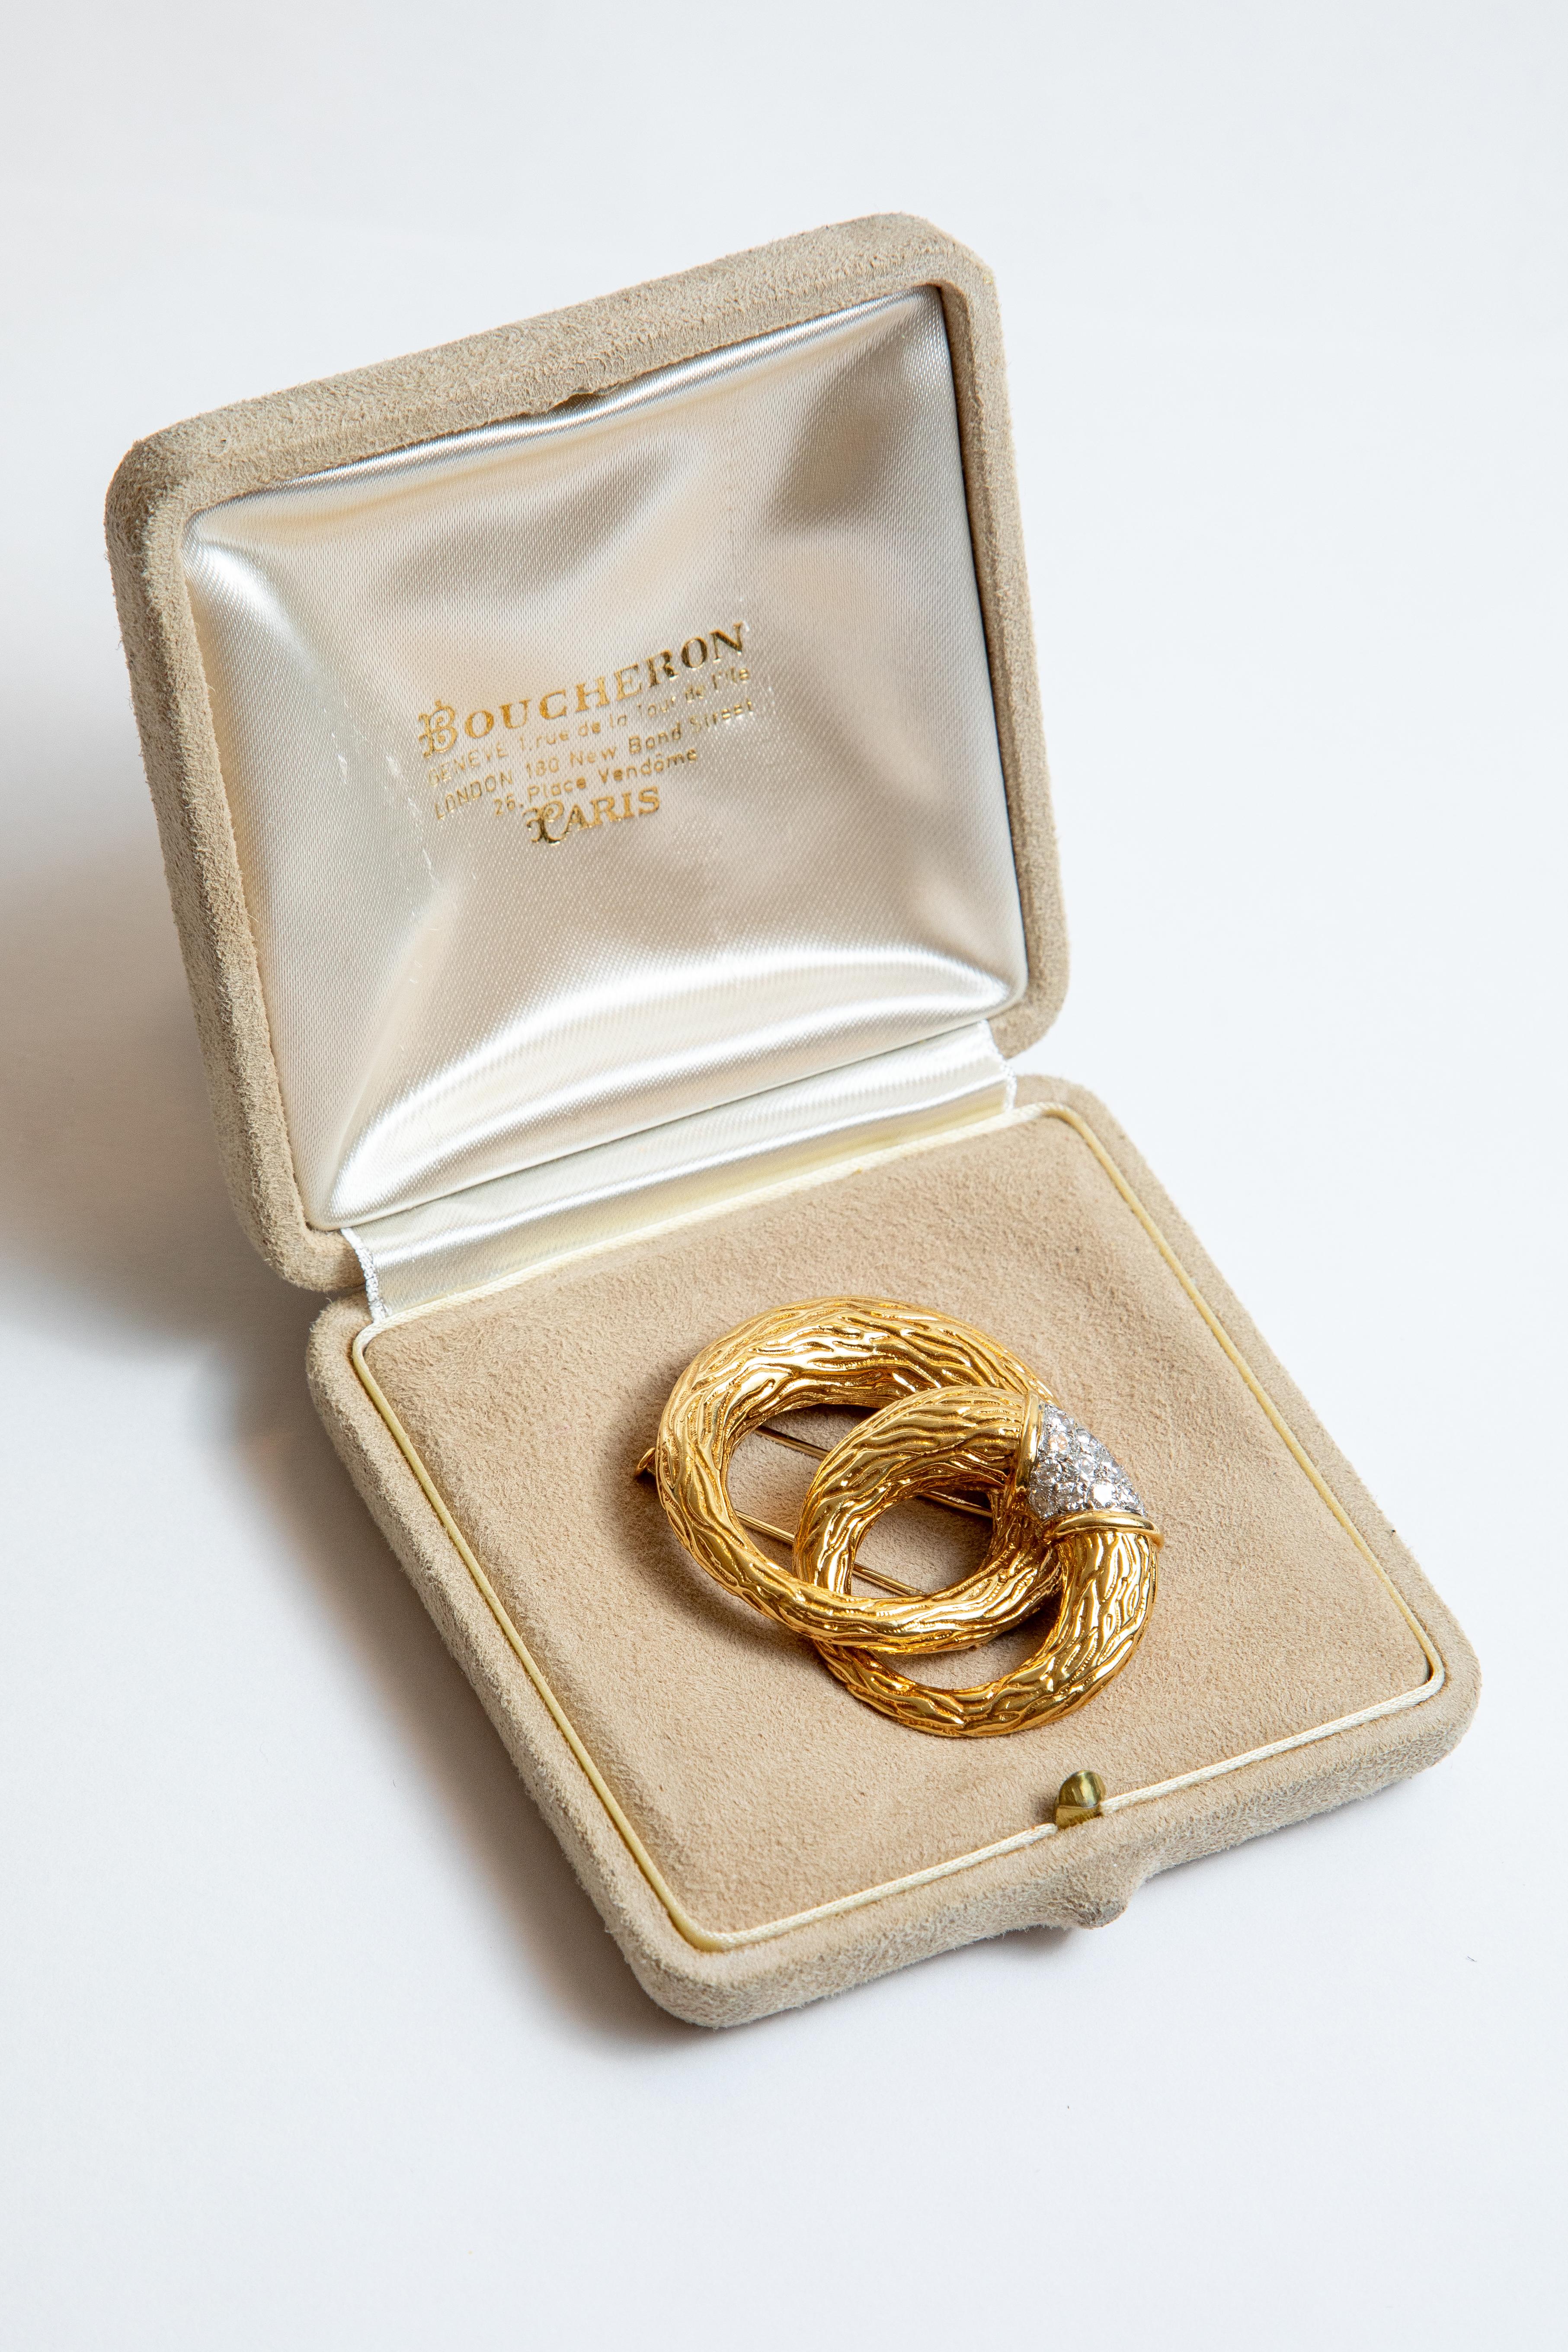 Brilliant Cut Boucheron 18K Gold and Diamonds Bracelet, Earrings and Brooch Set